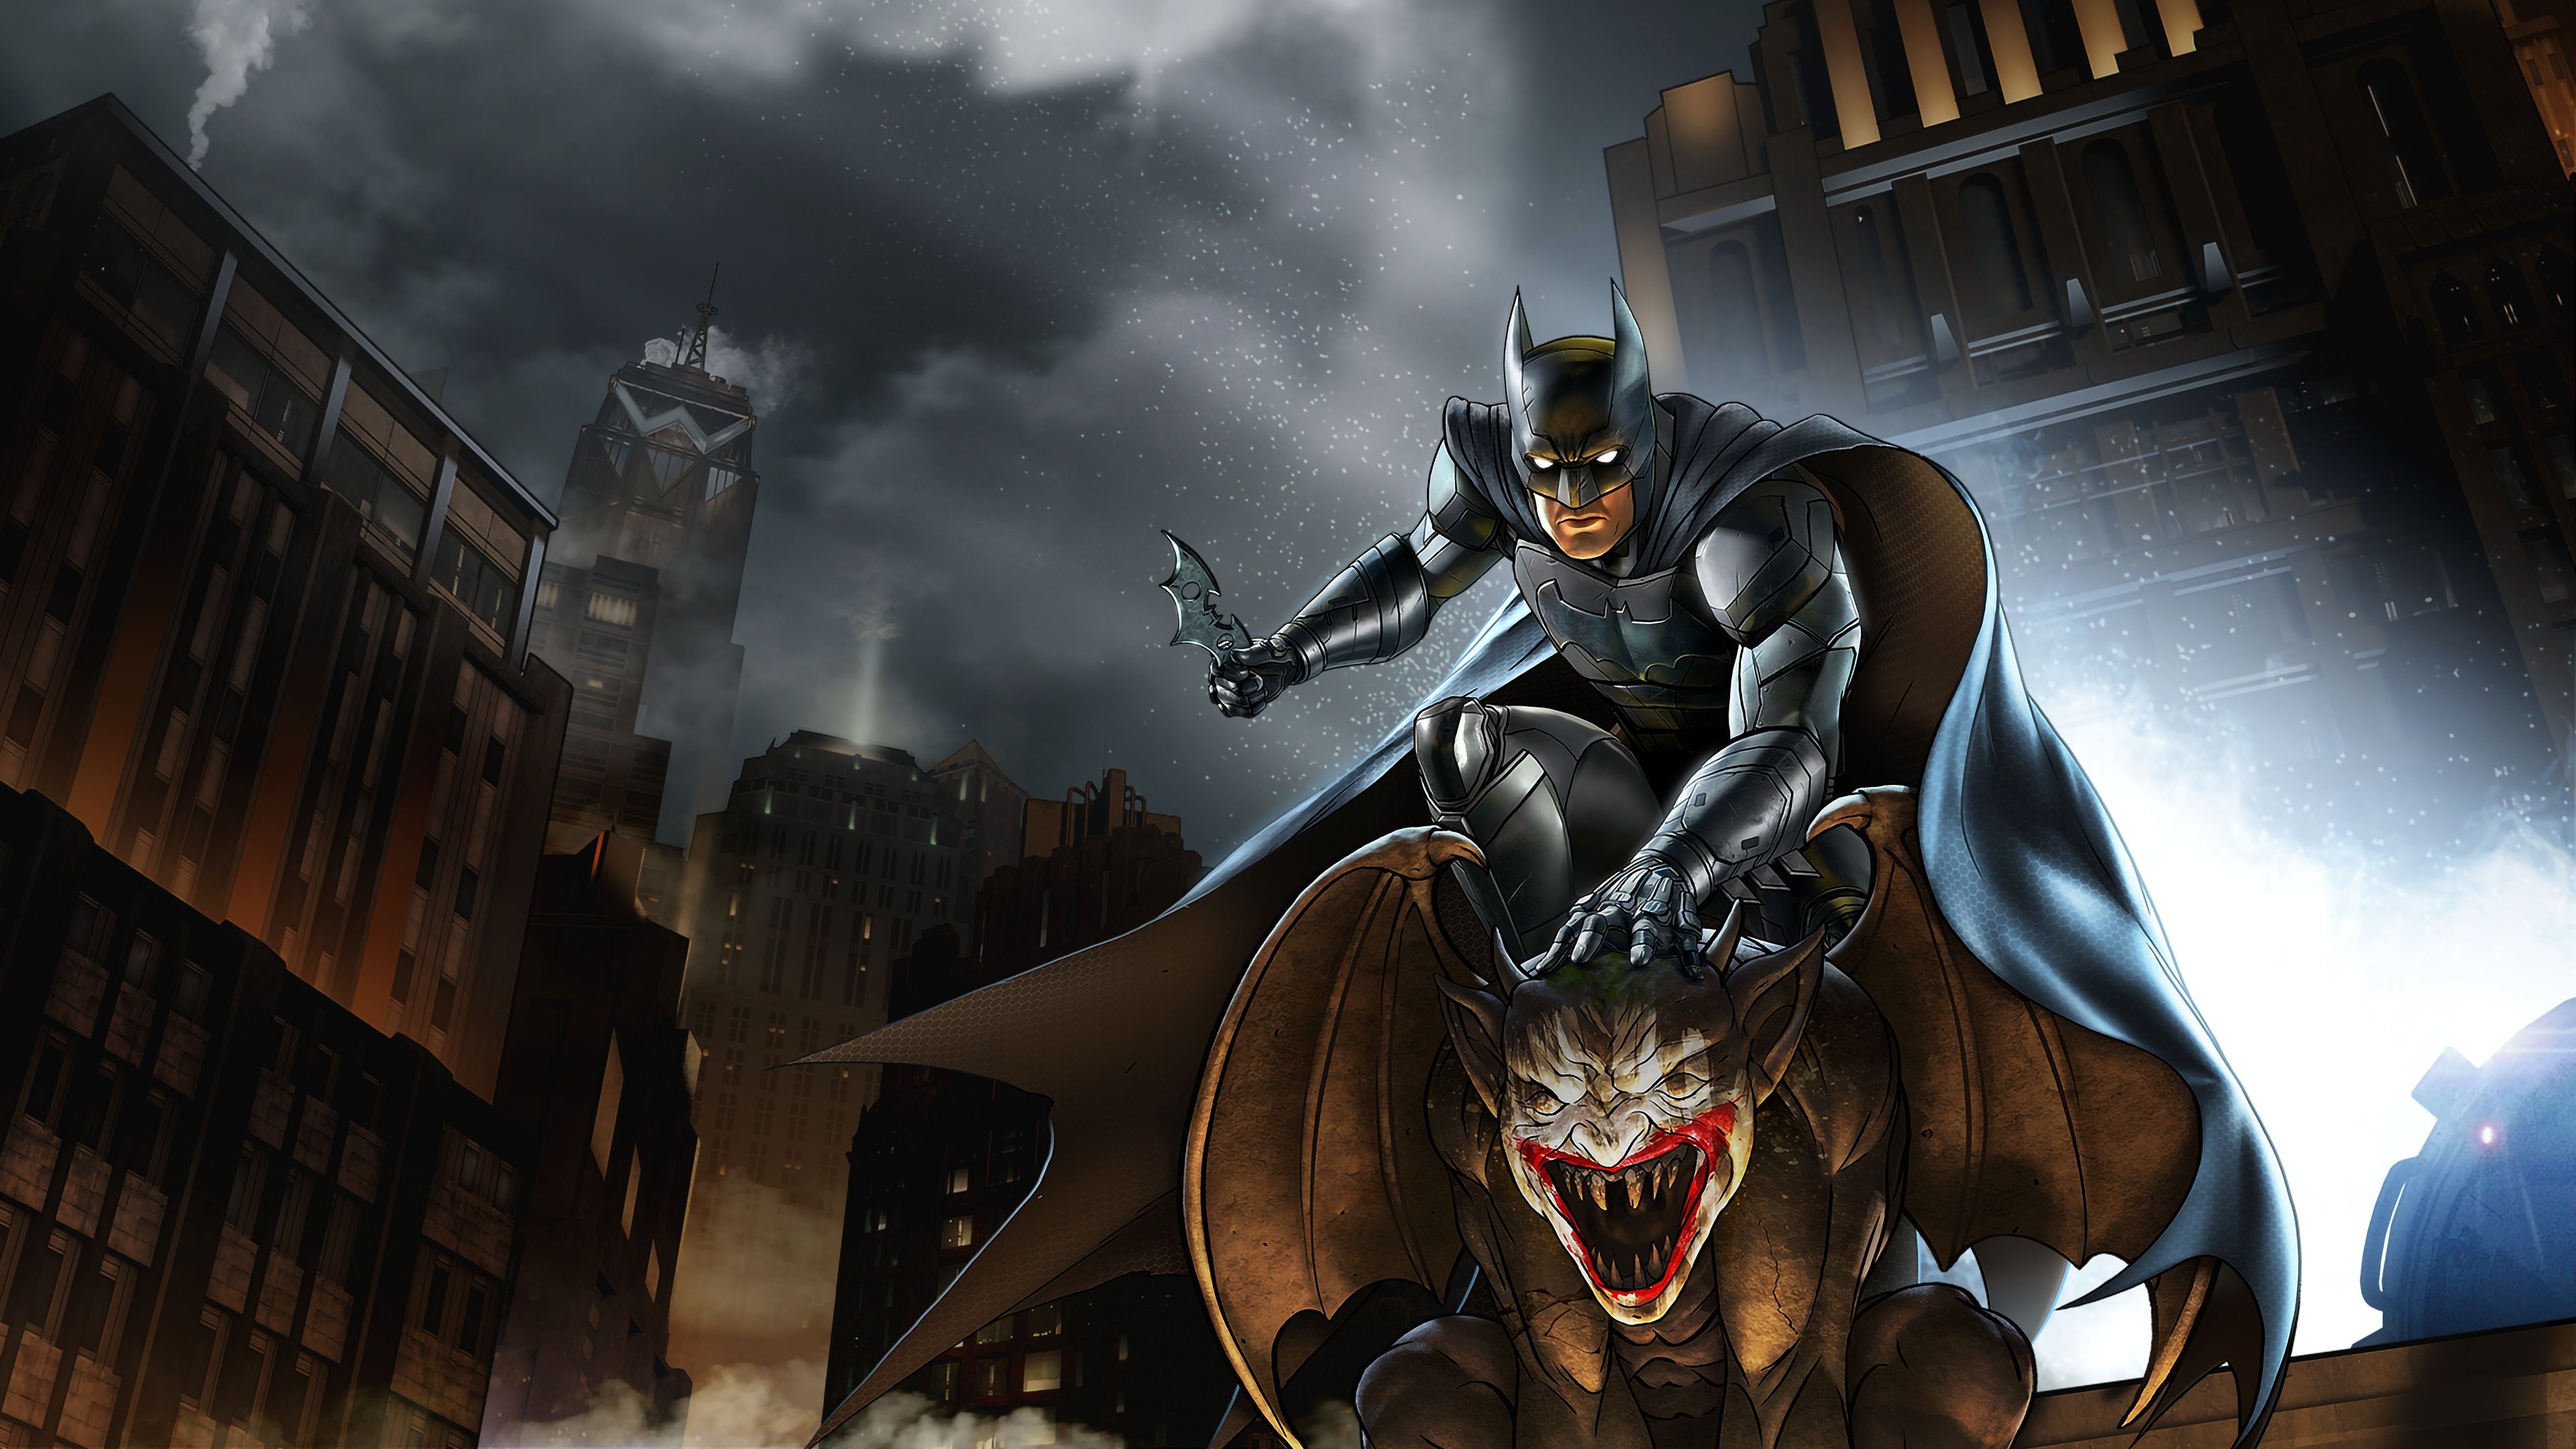 Batman cover image